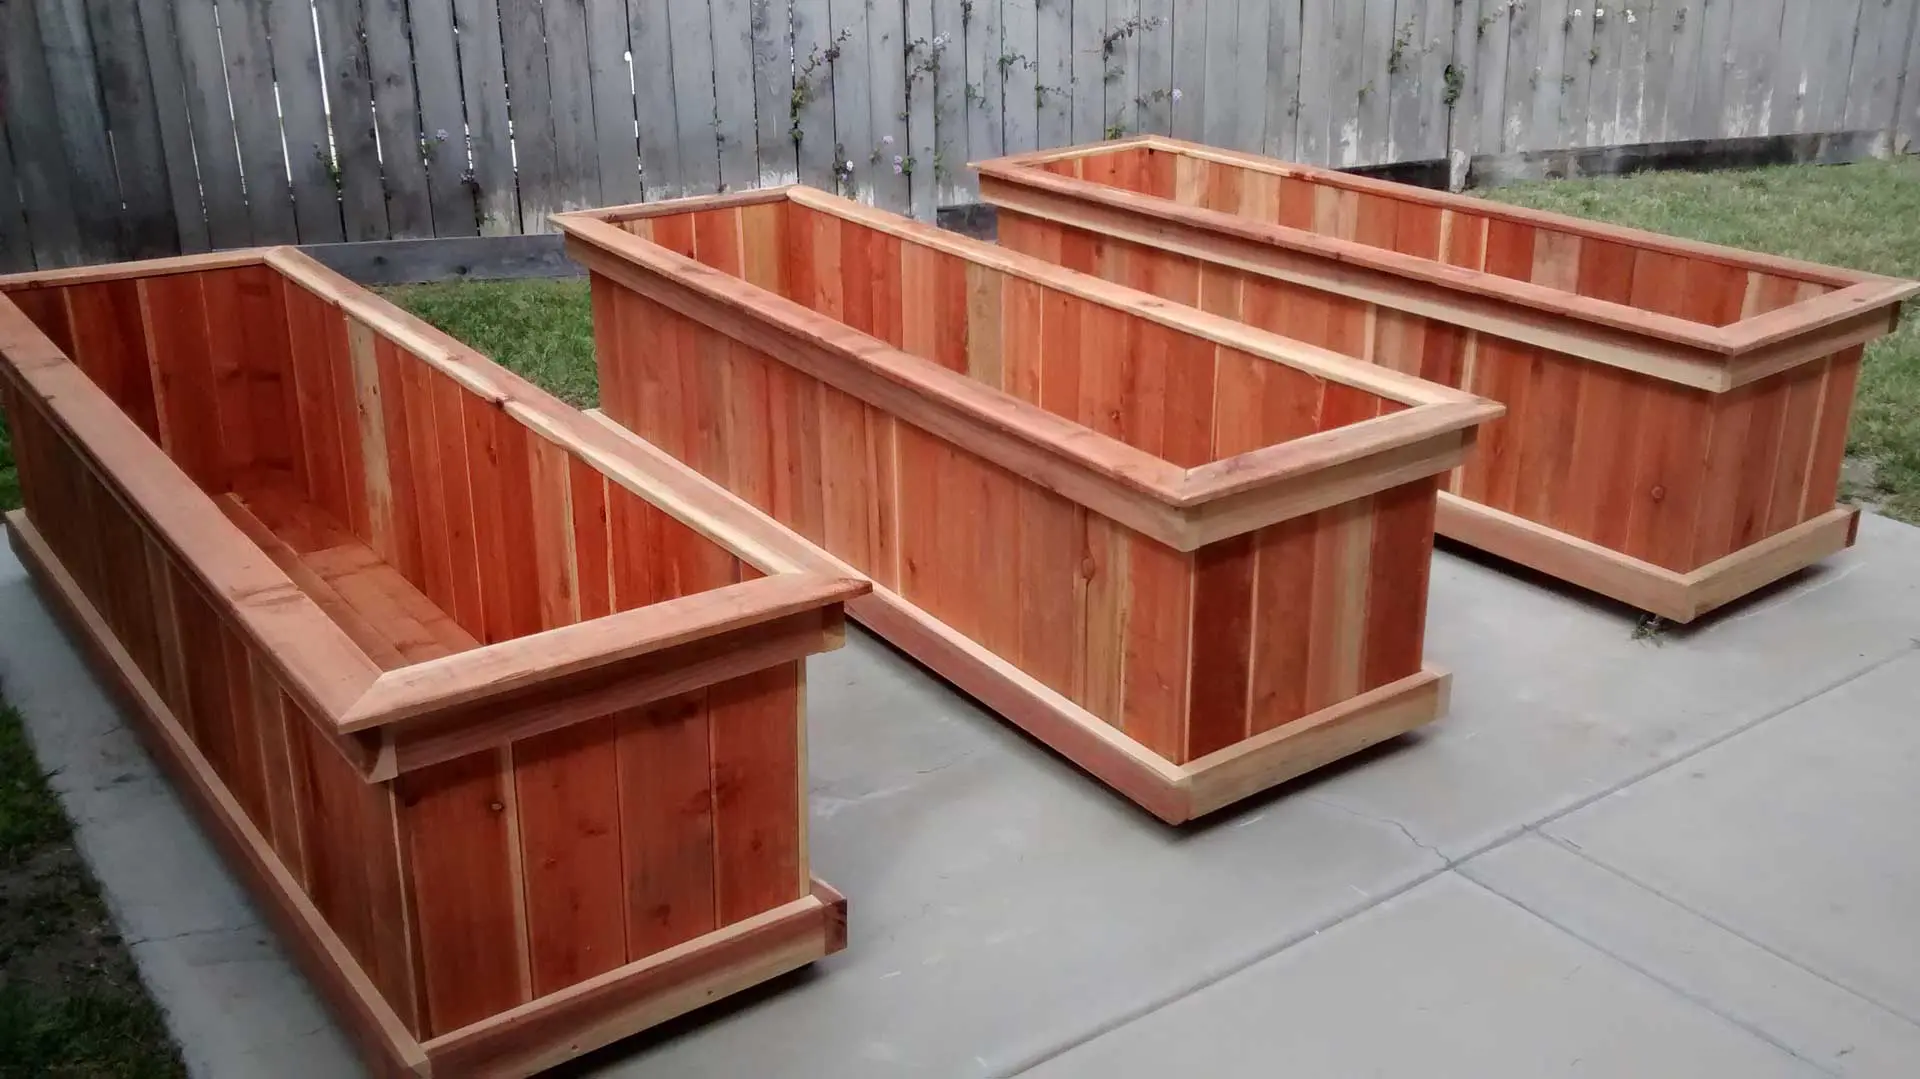 Three wooden planters on wheels in a backyard.